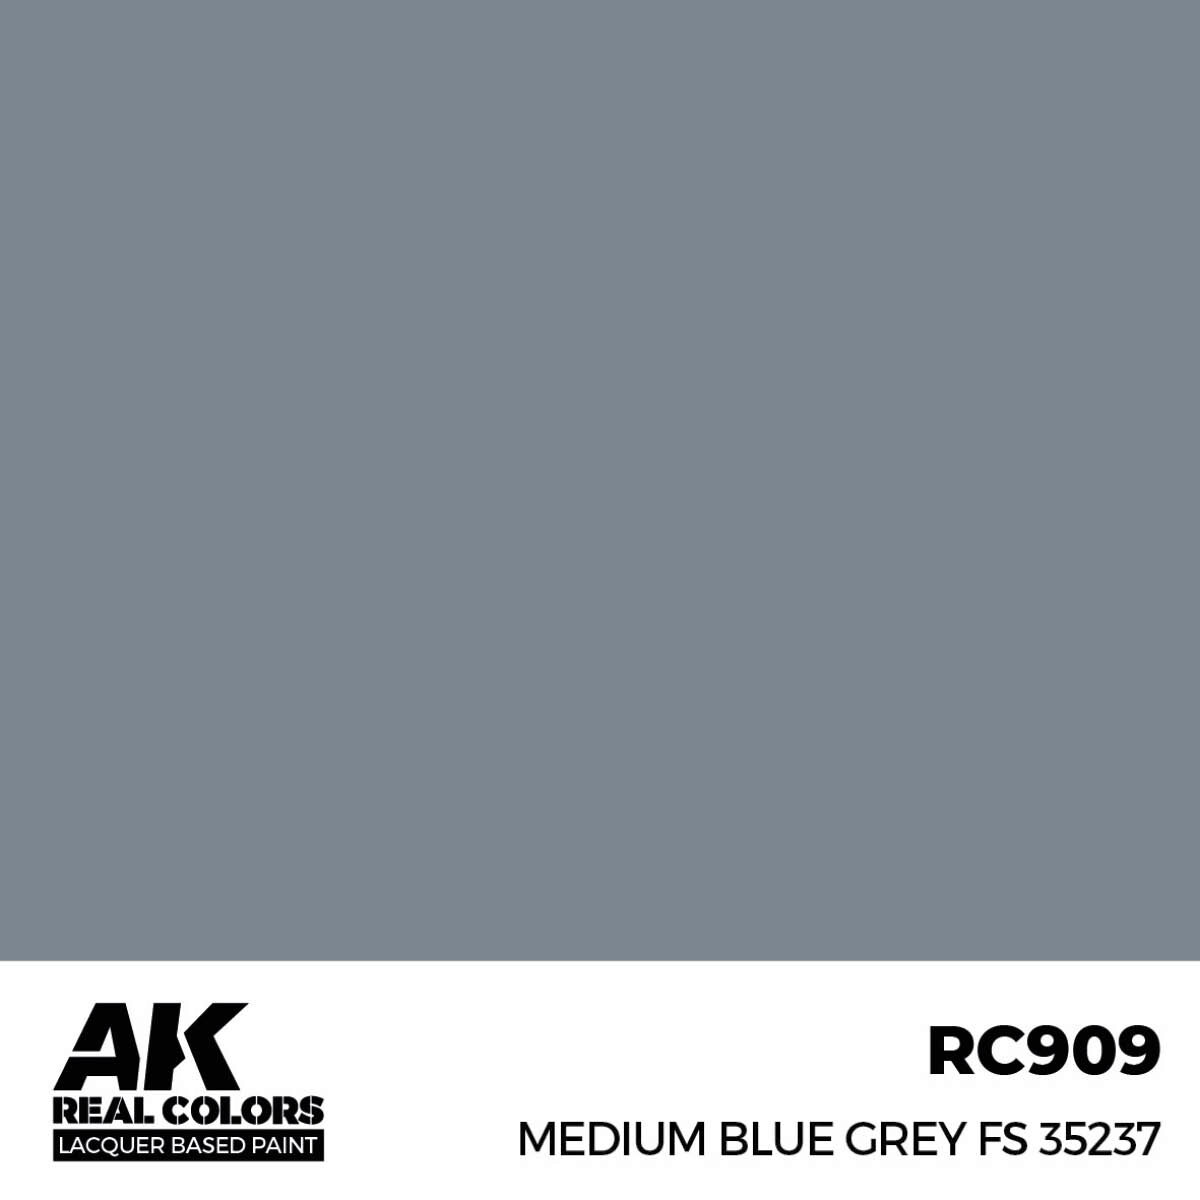 AK RC909 Real Colors Medium Blue Grey FS 35237 17 ml.